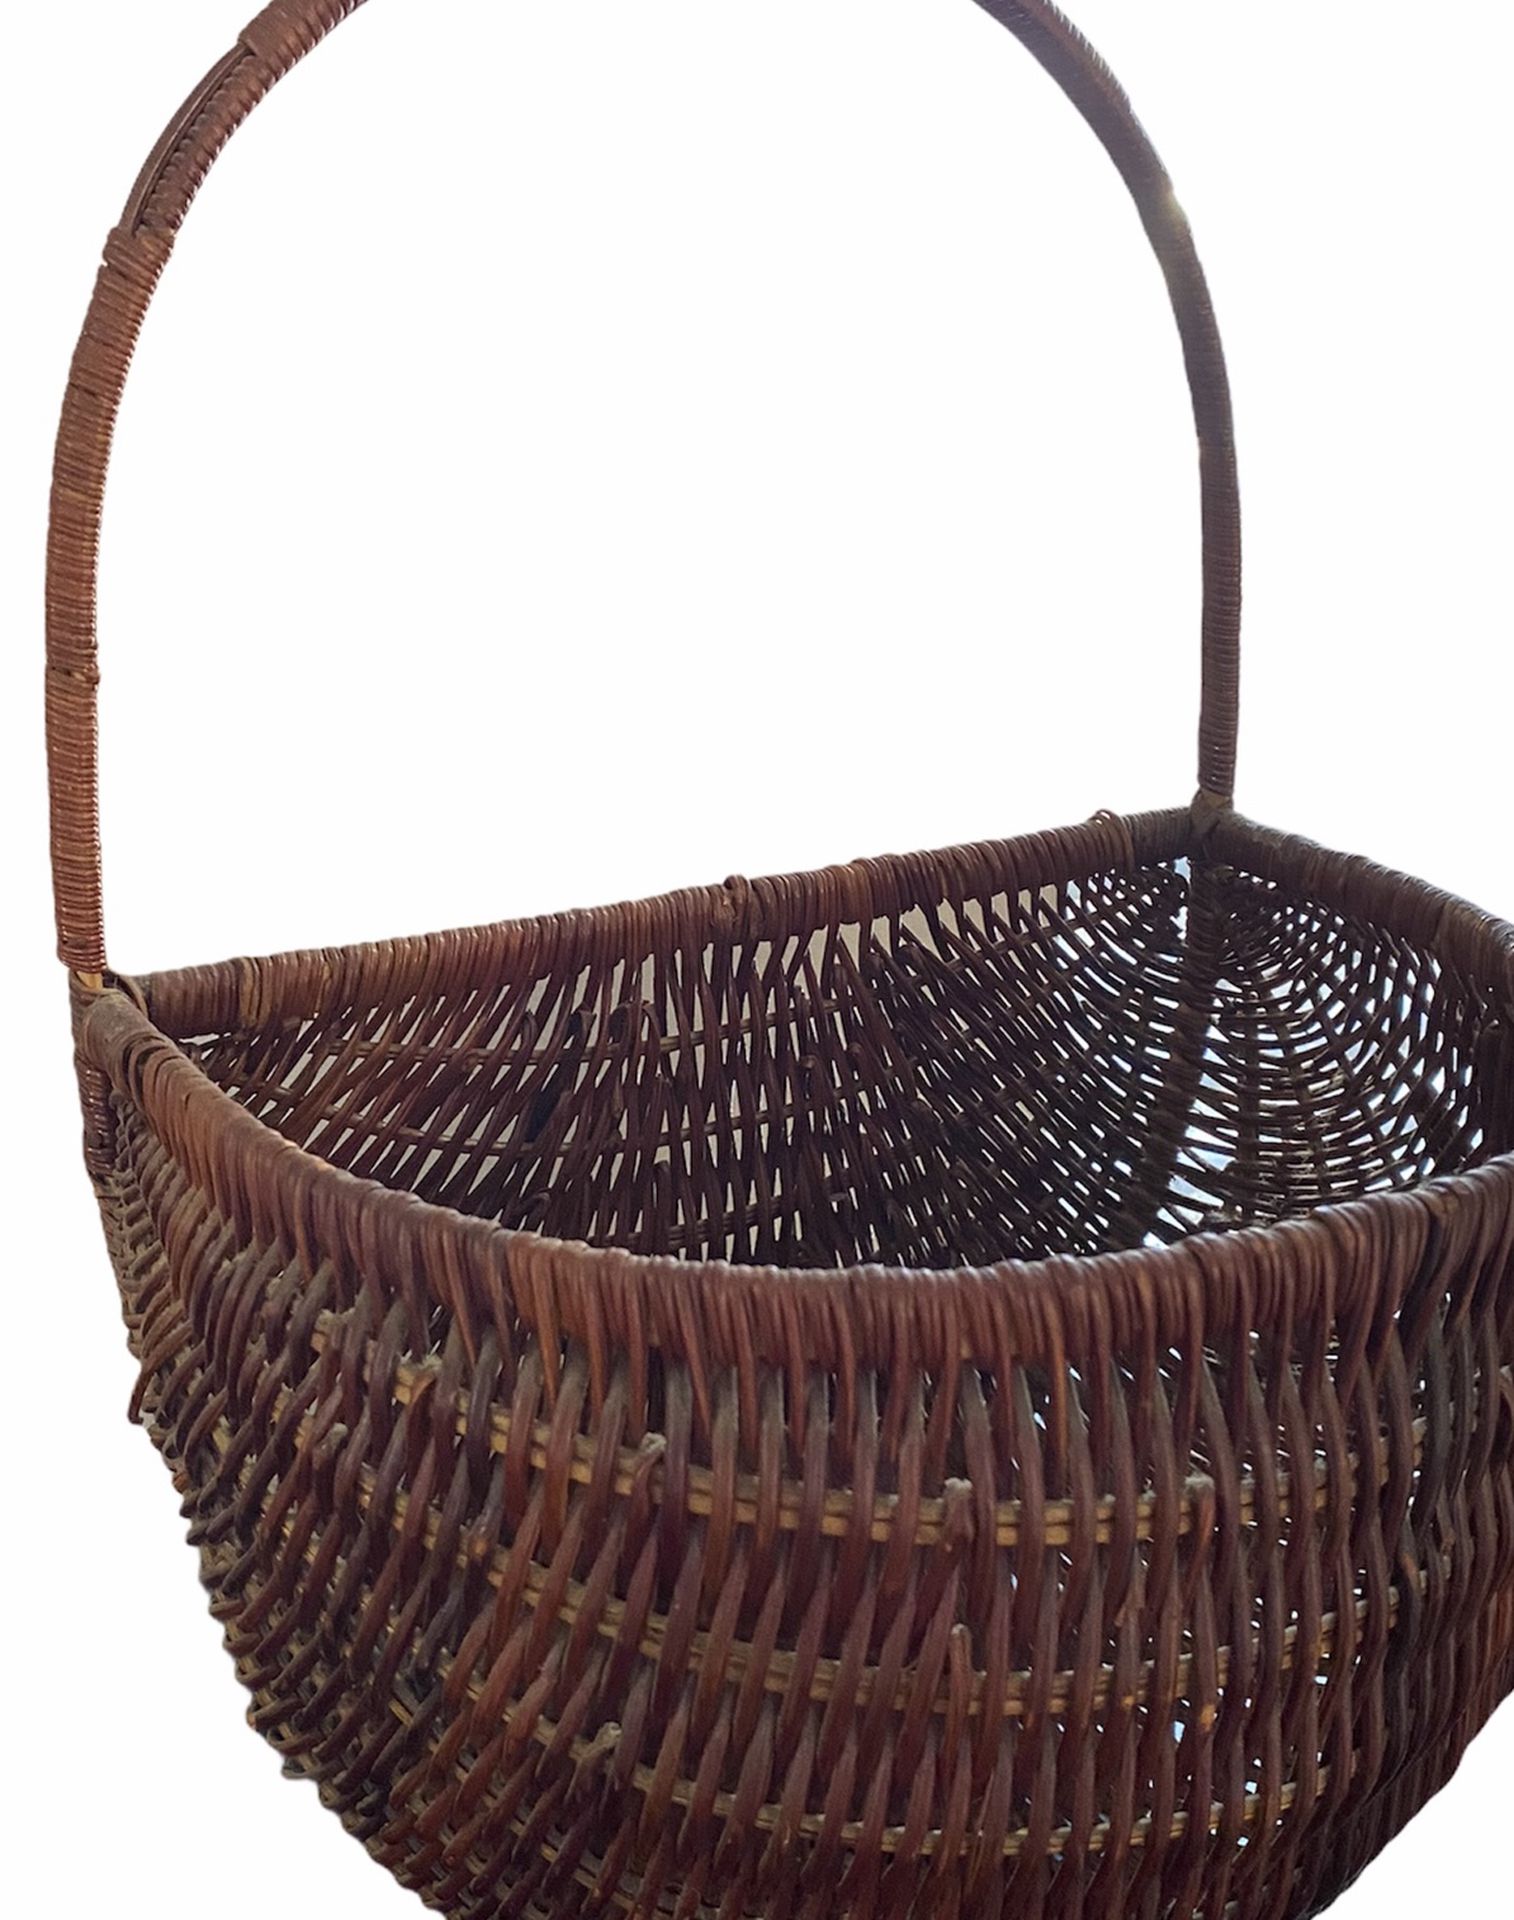 Hanging Wicker Basket • Plant basket